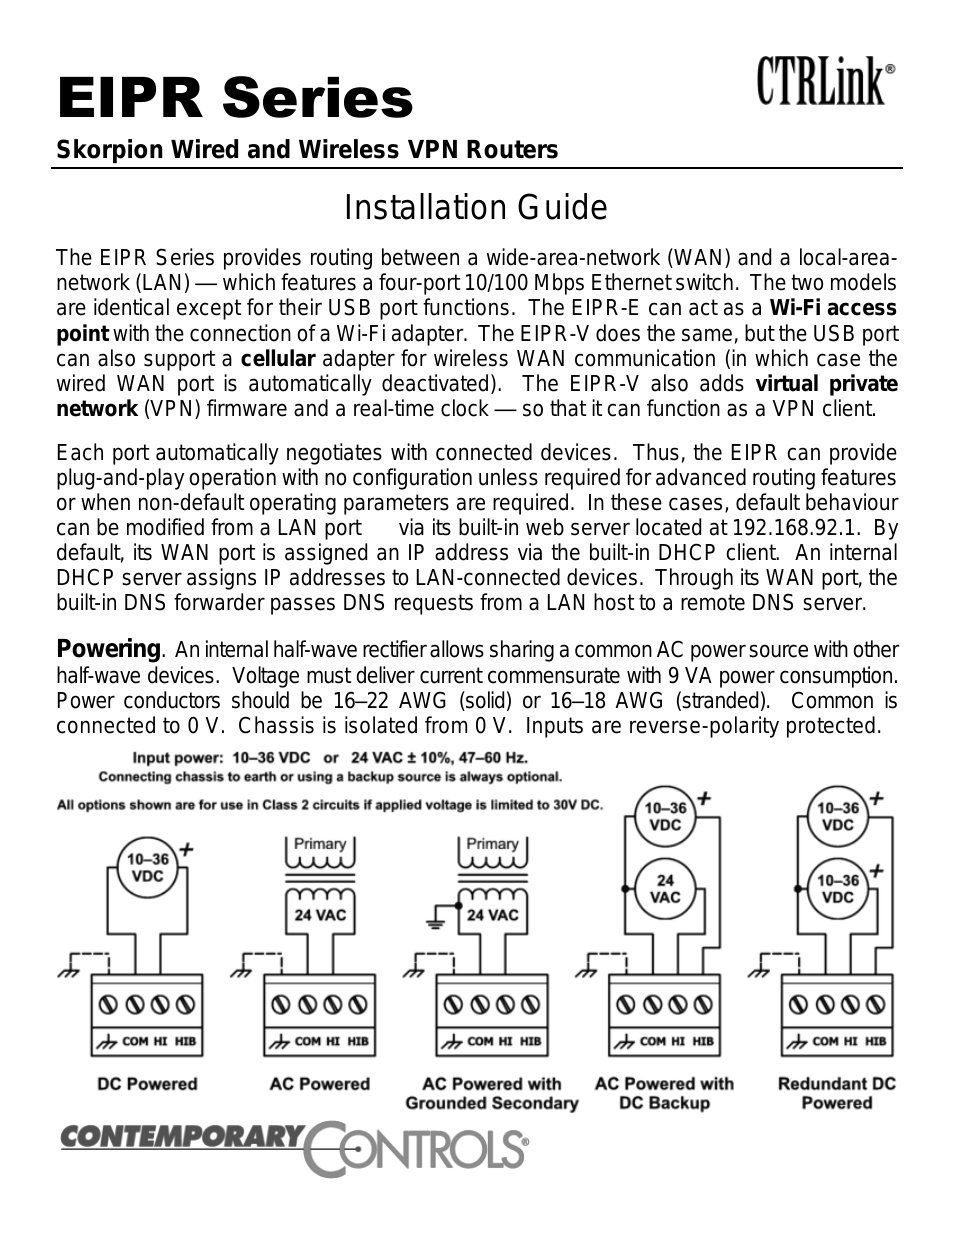 EIPR Wired/Wireless VPN Router Installation Guide